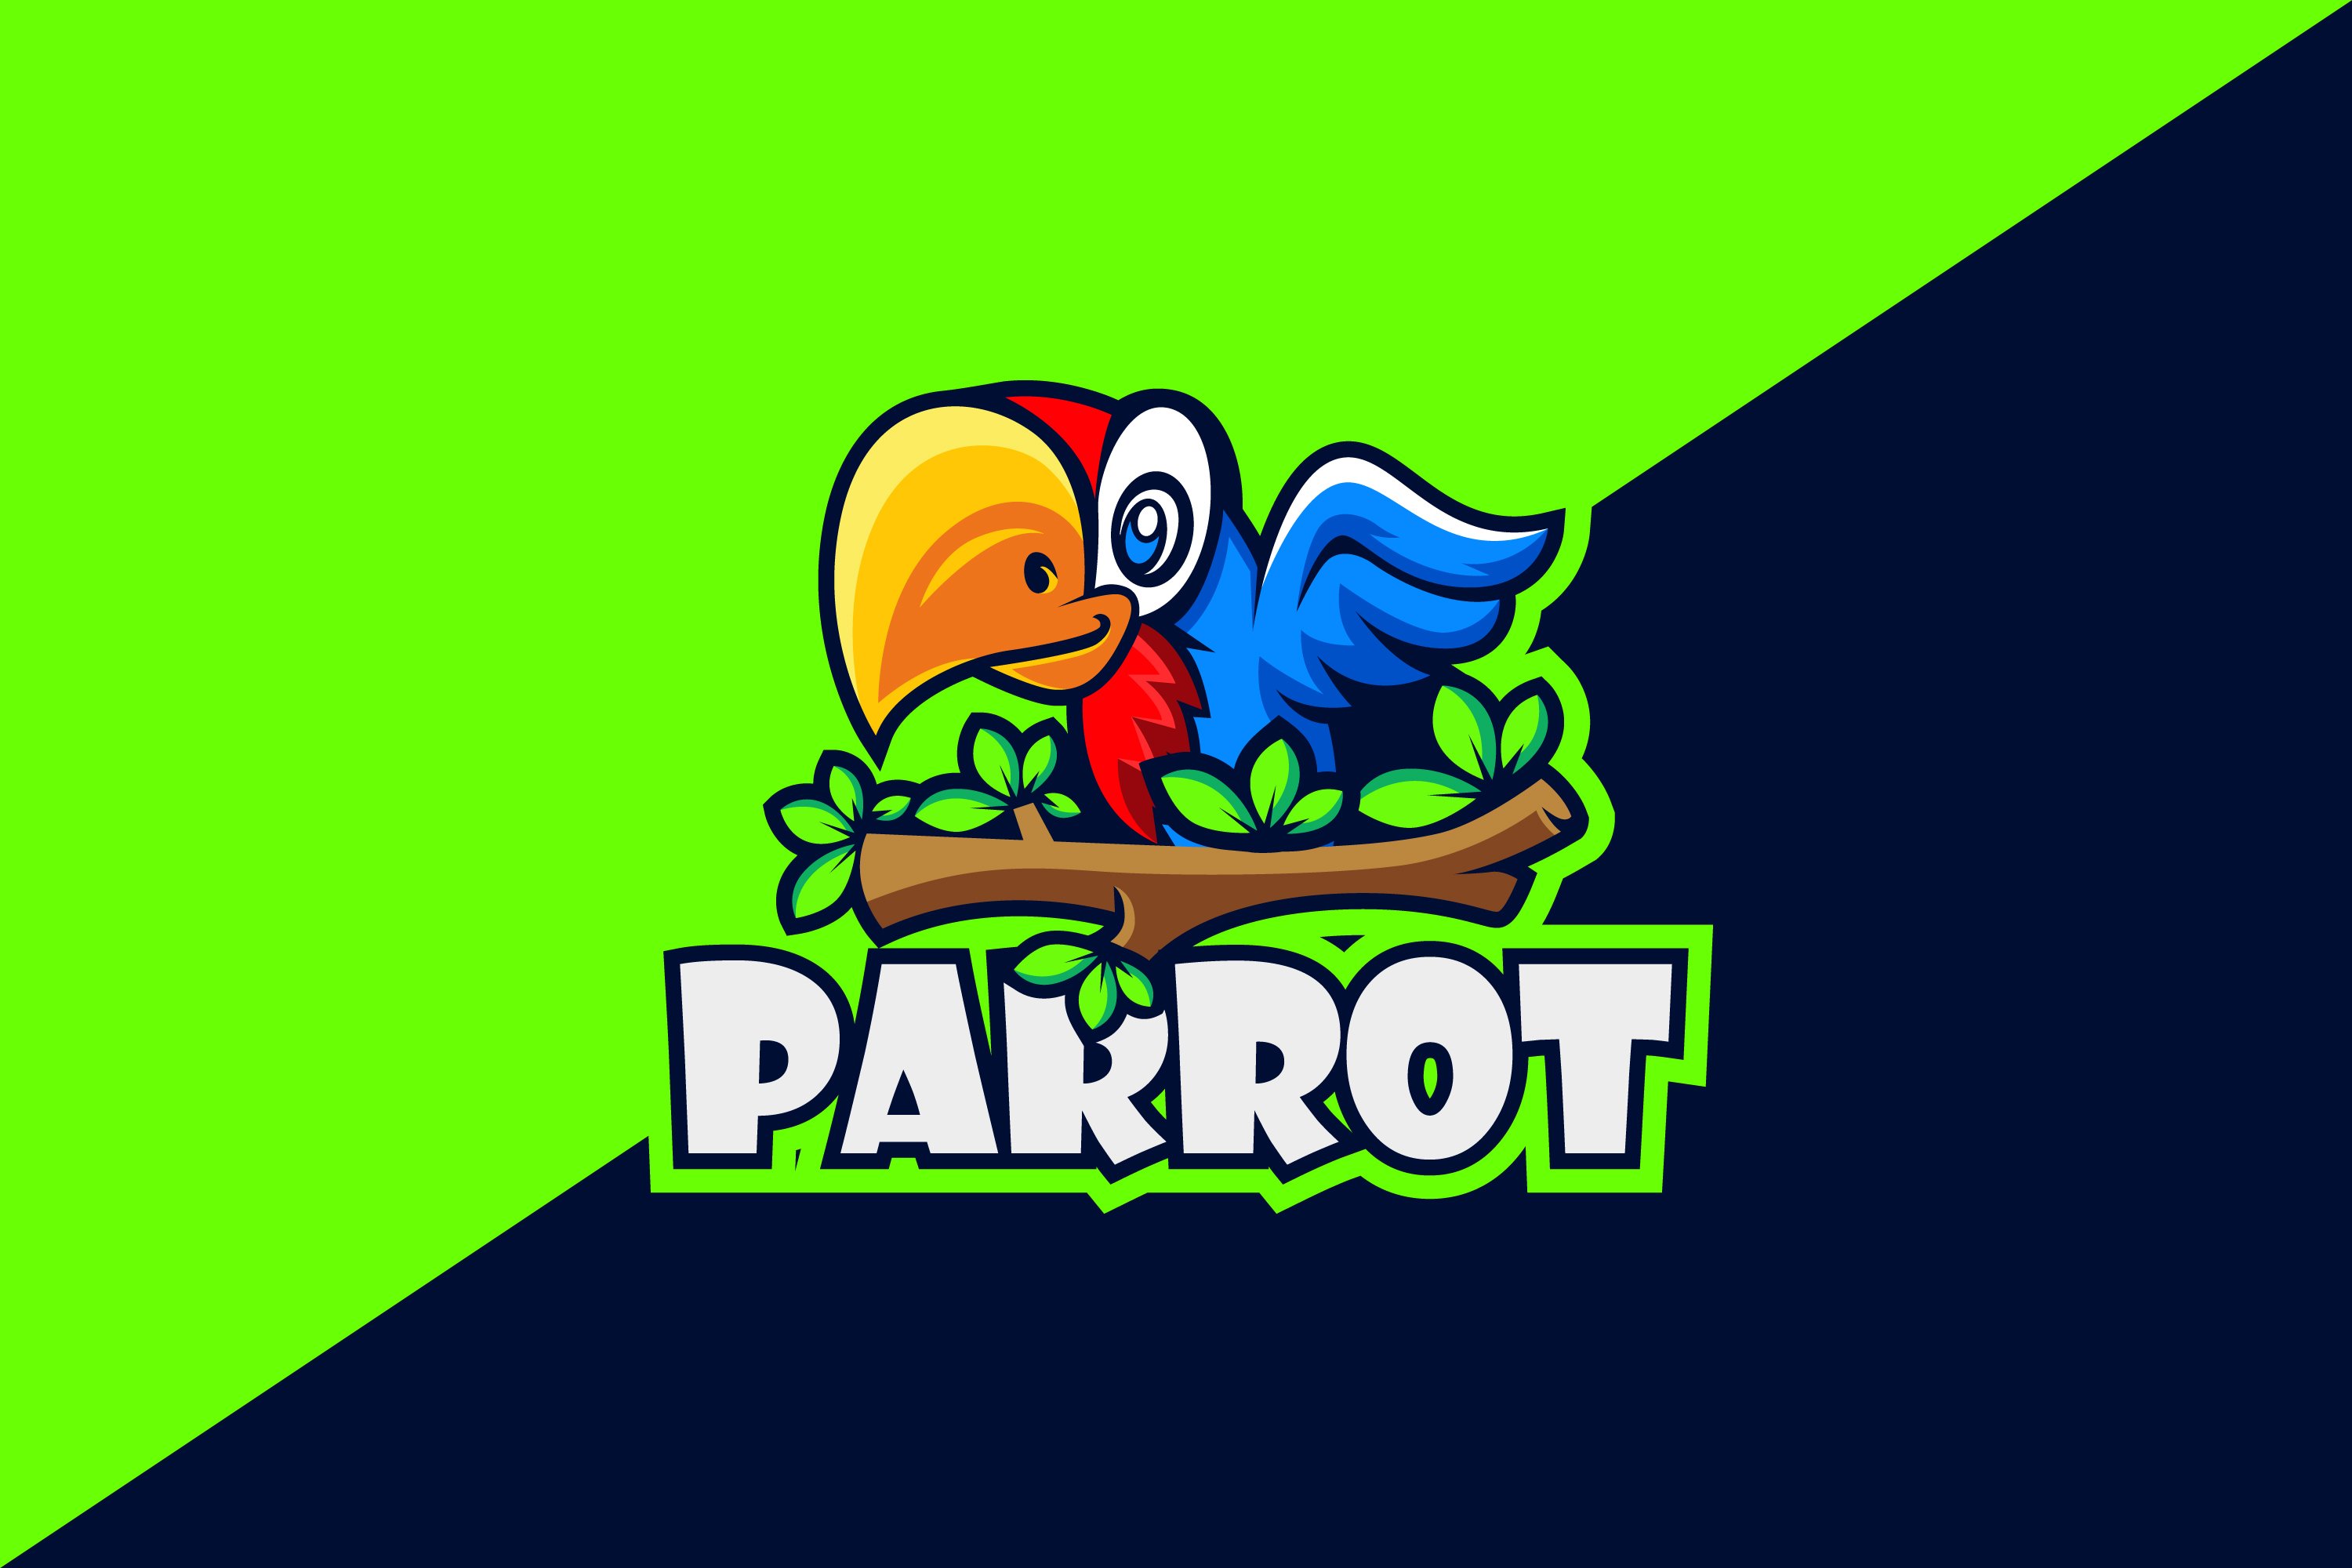 Parrot Cartoon Logo cover image.